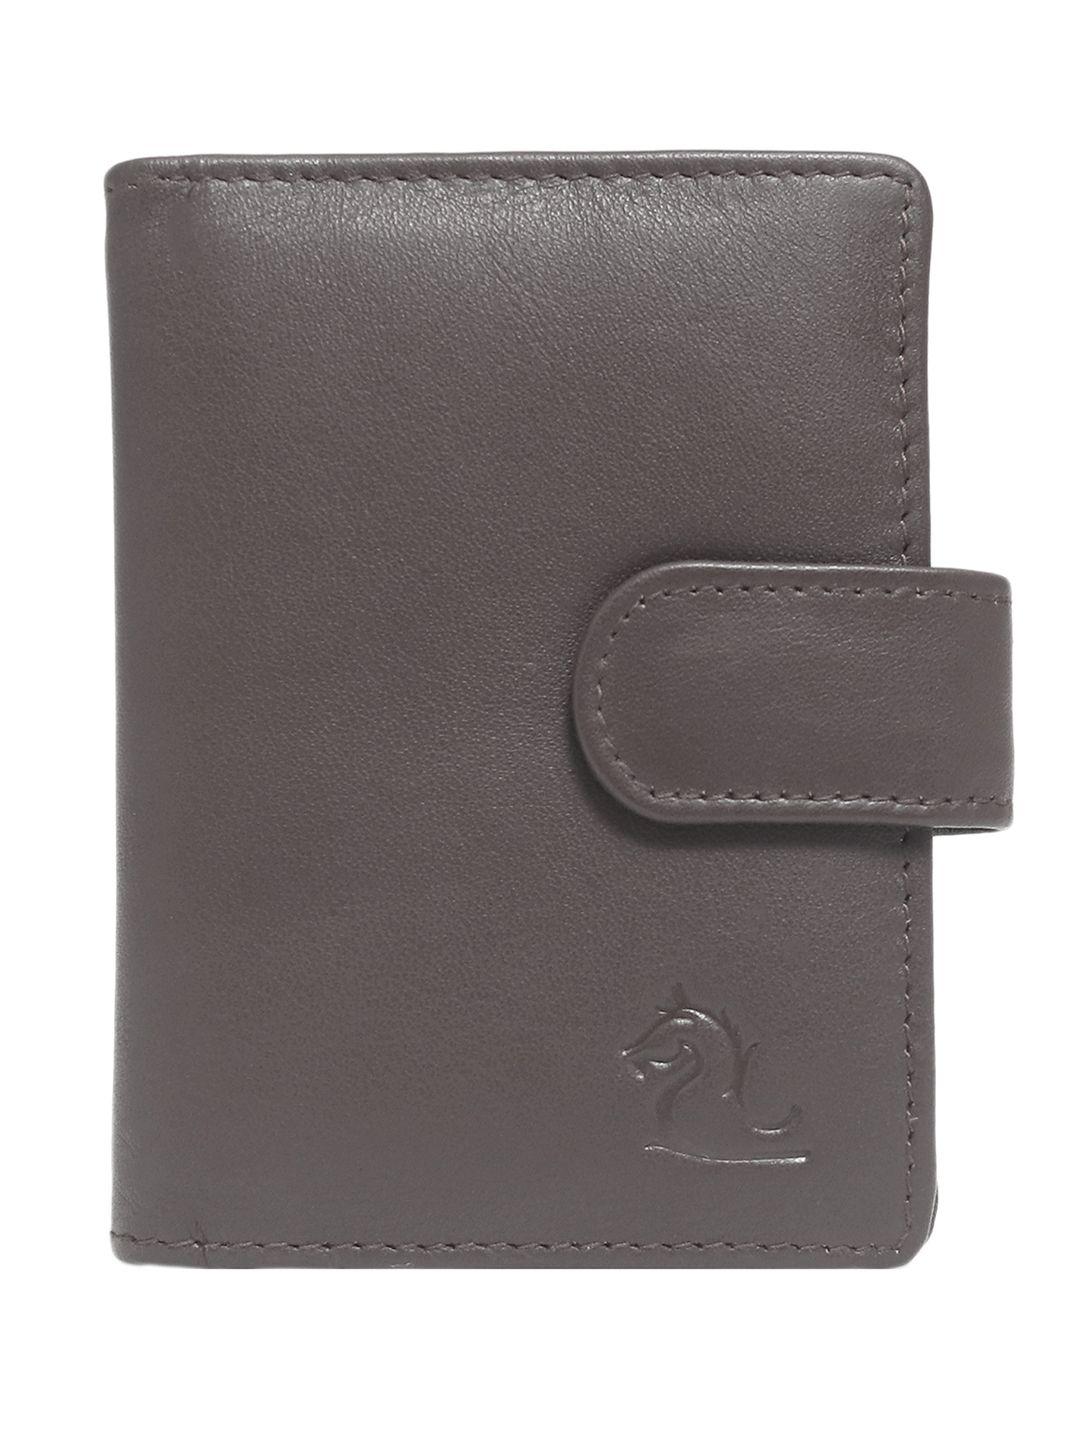 kara unisex brown solid leather card holder